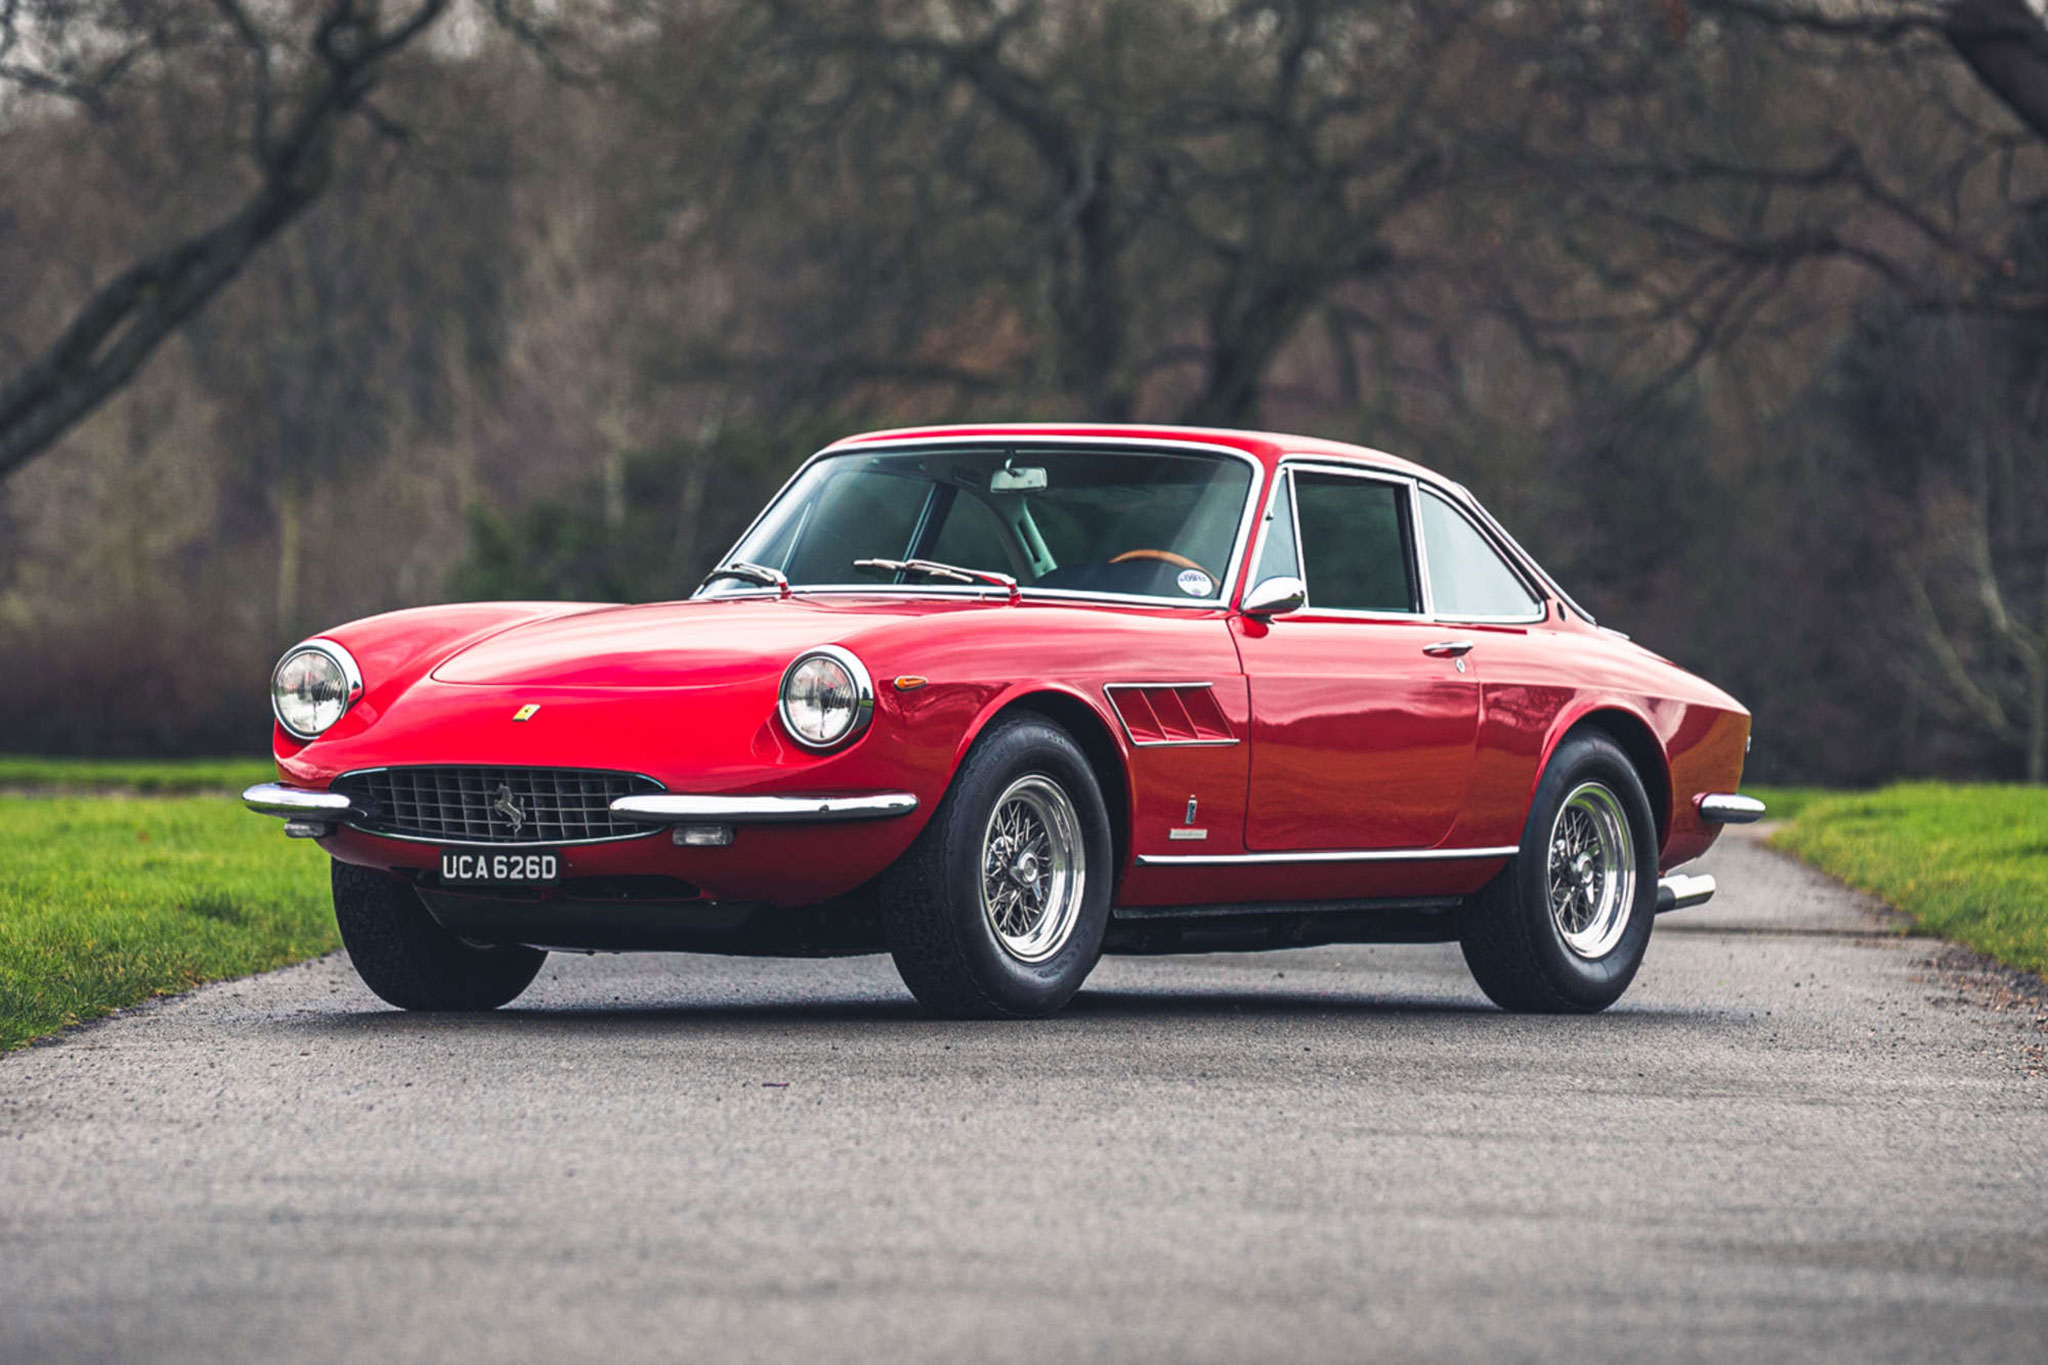 1968 Ferrari 330 GTC - £331,875 - Silverstone Auction mars 2021.